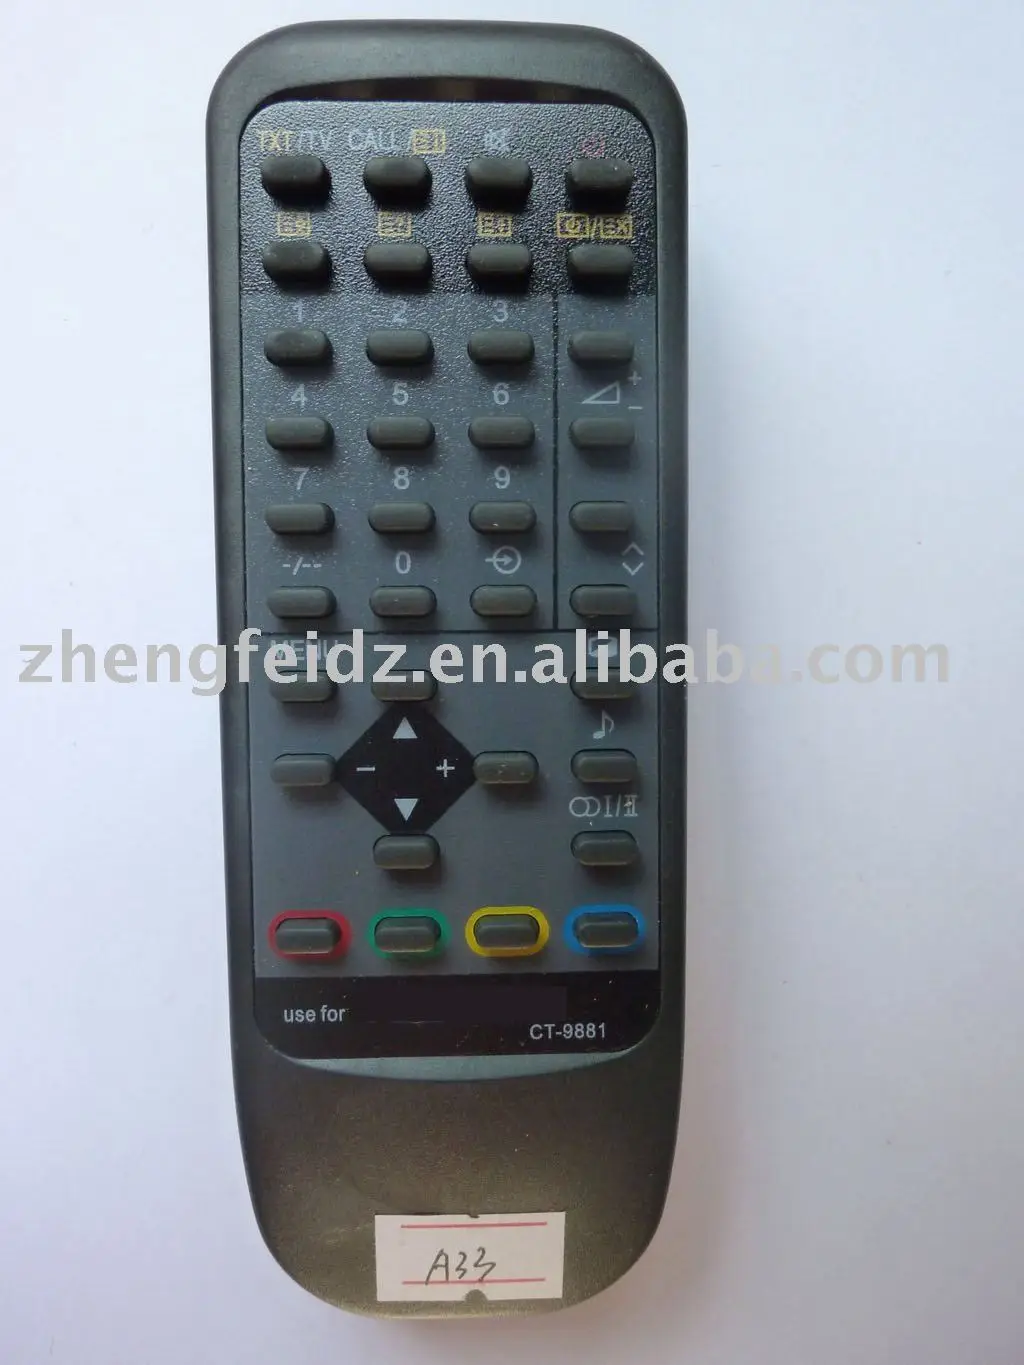 Control Remoto Tv Toshiba Ct 818